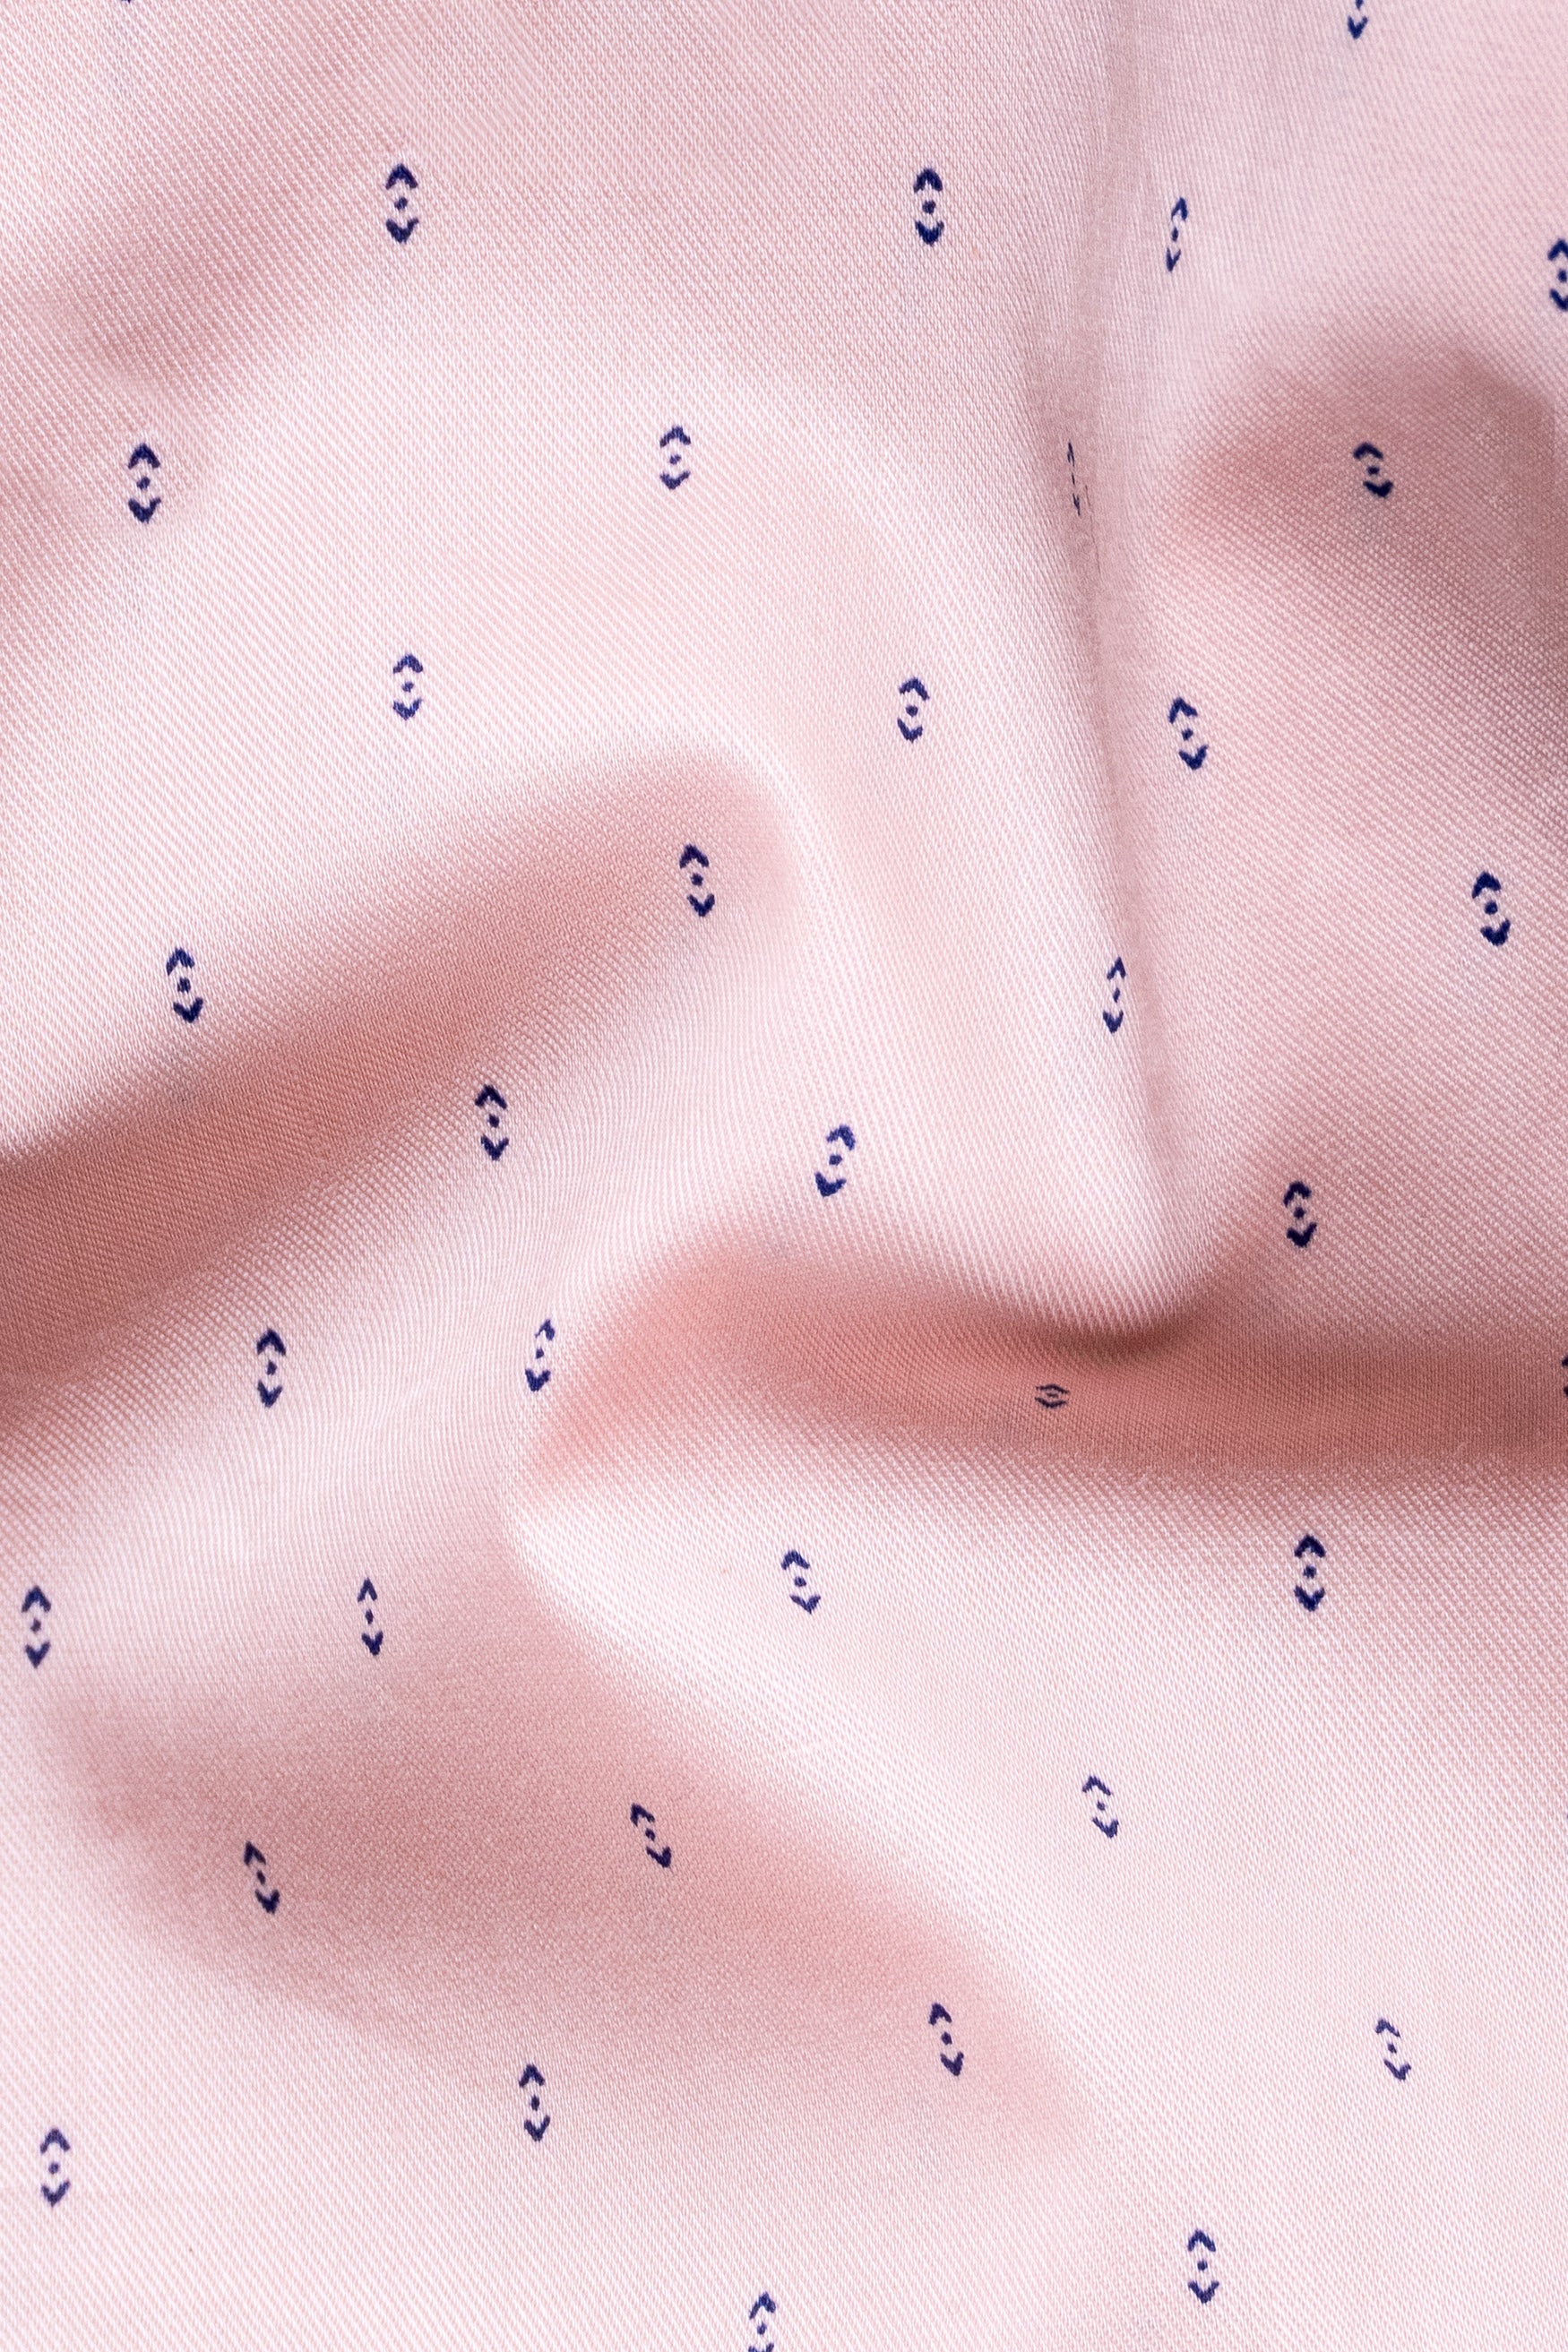 Thistle Pink Printed Subtle Sheen Super Soft Premium Cotton Designer Shirt